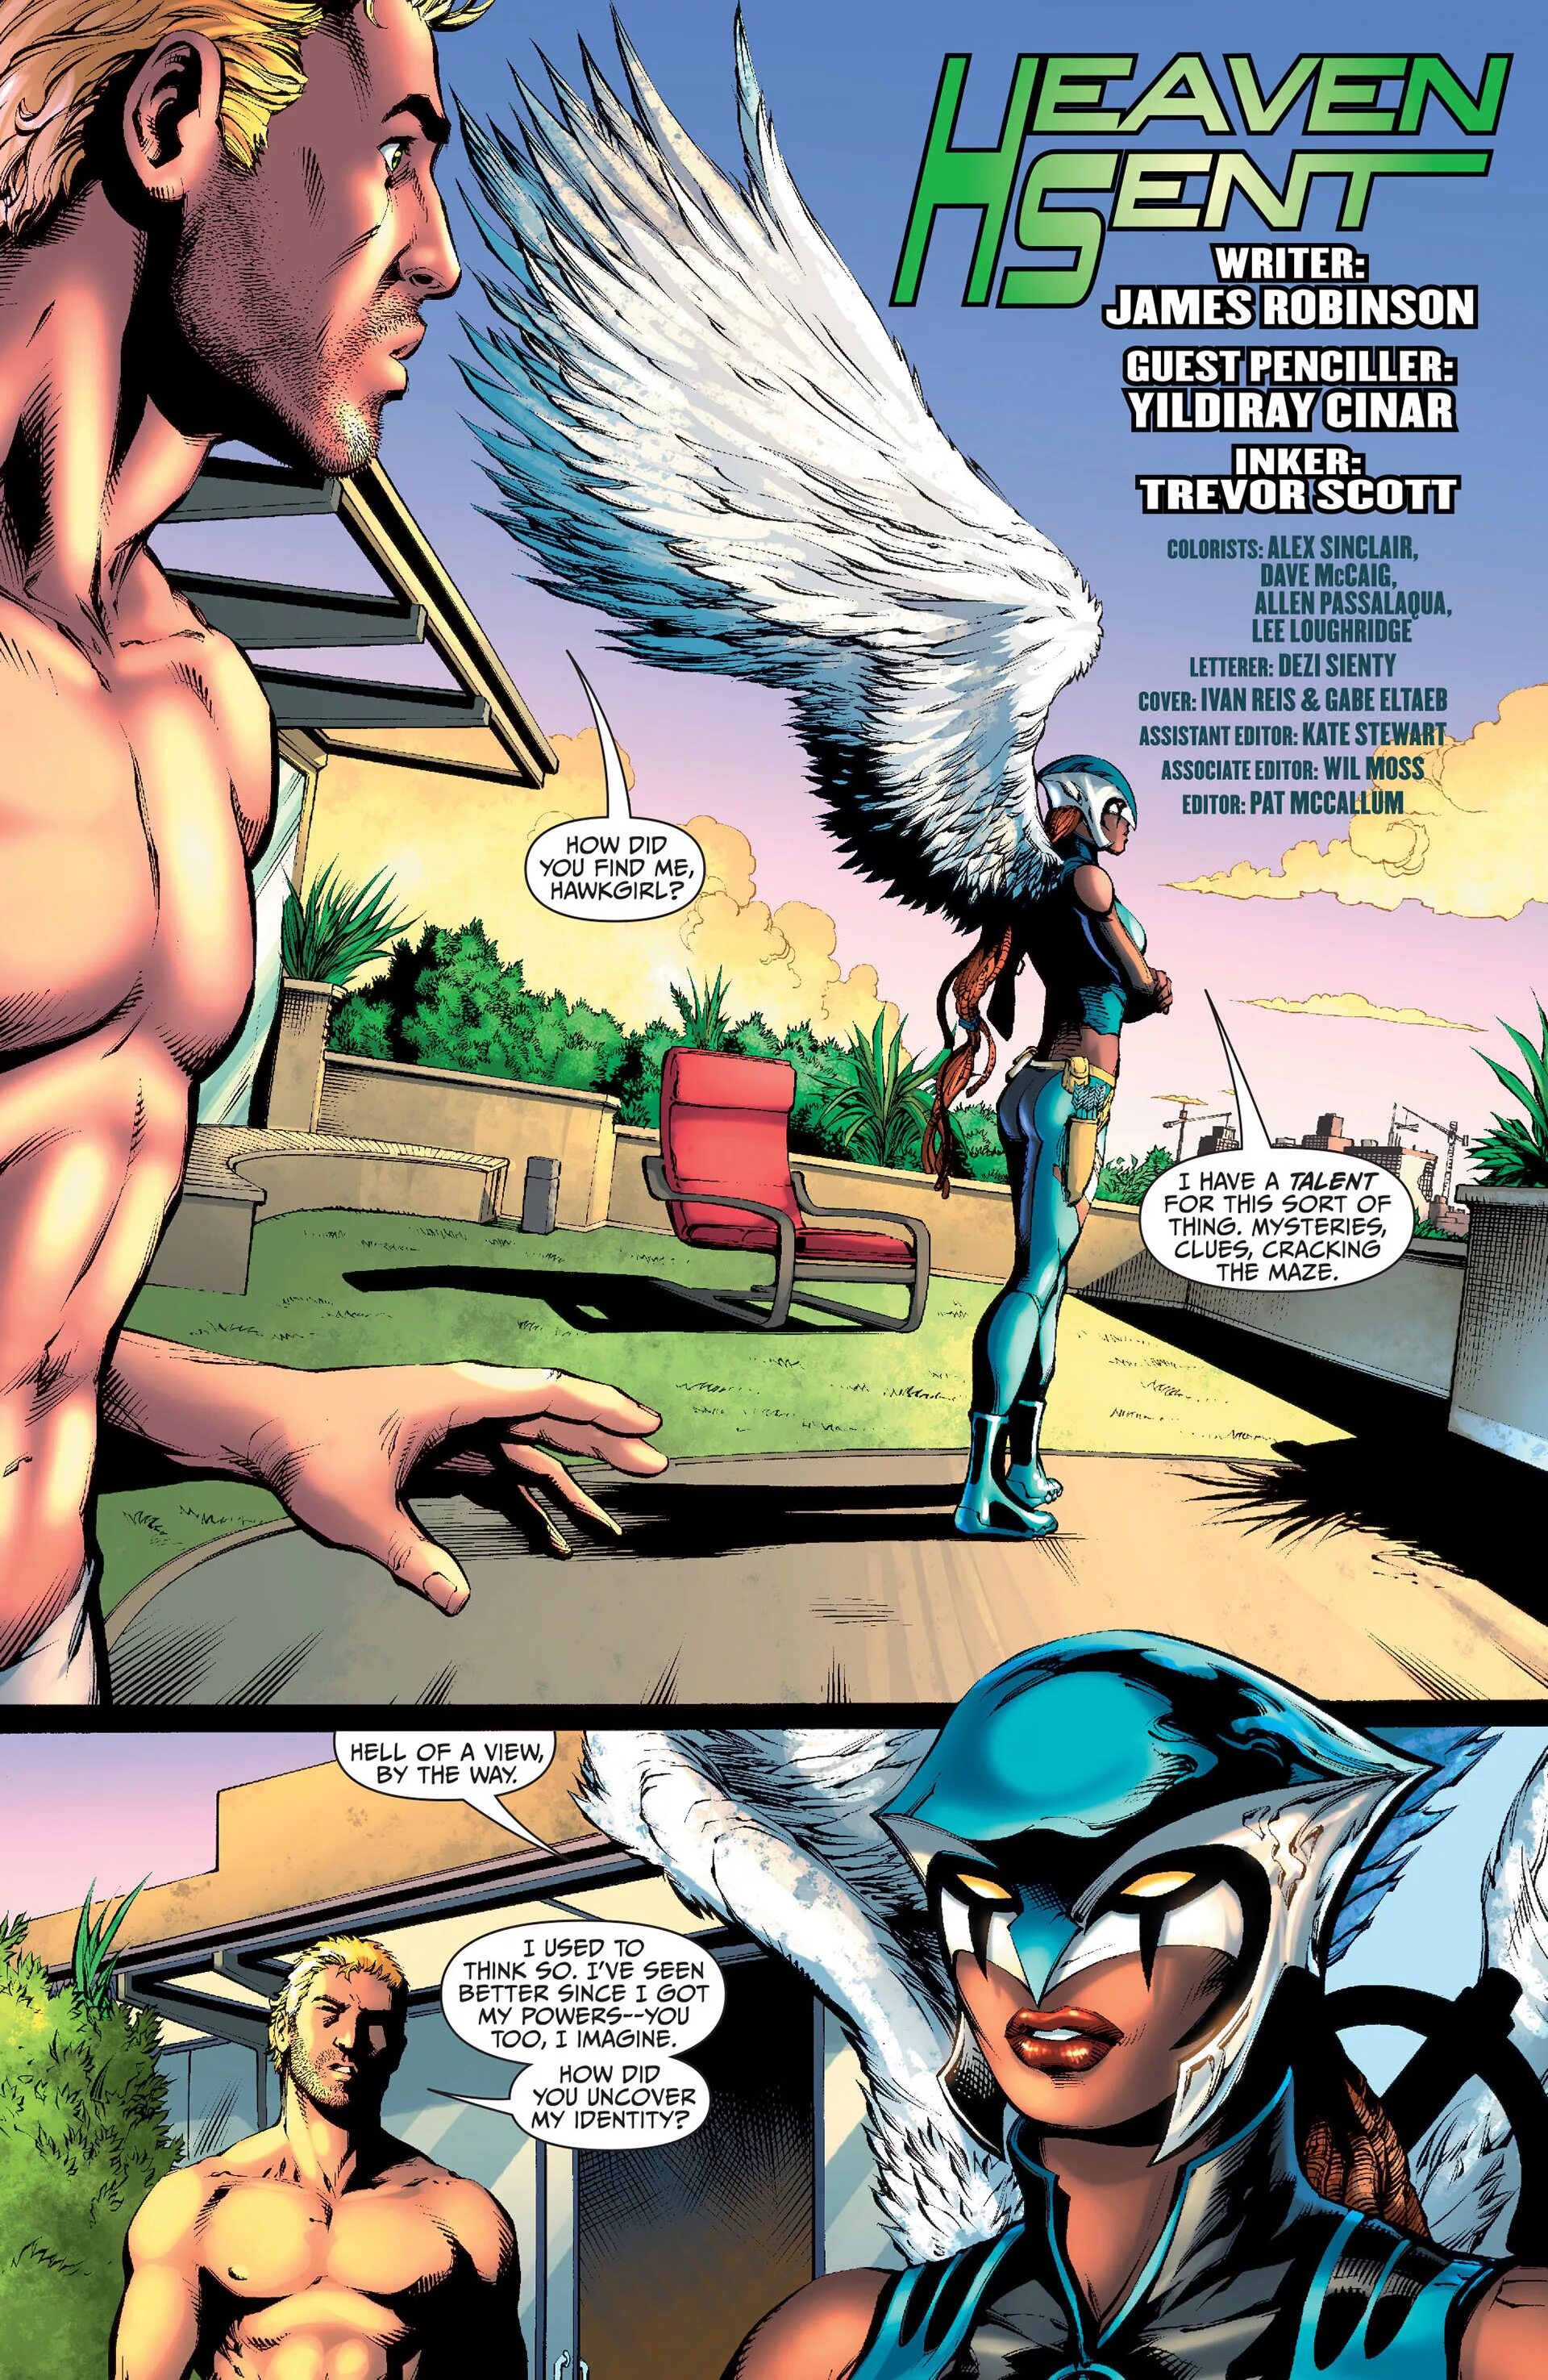 Комиксы земля 2. Hawkgirl Earth 2. Земля 0 ДИСИ. Комикс Seventh Heaven. Картер Холл и Кендра Сандерс.